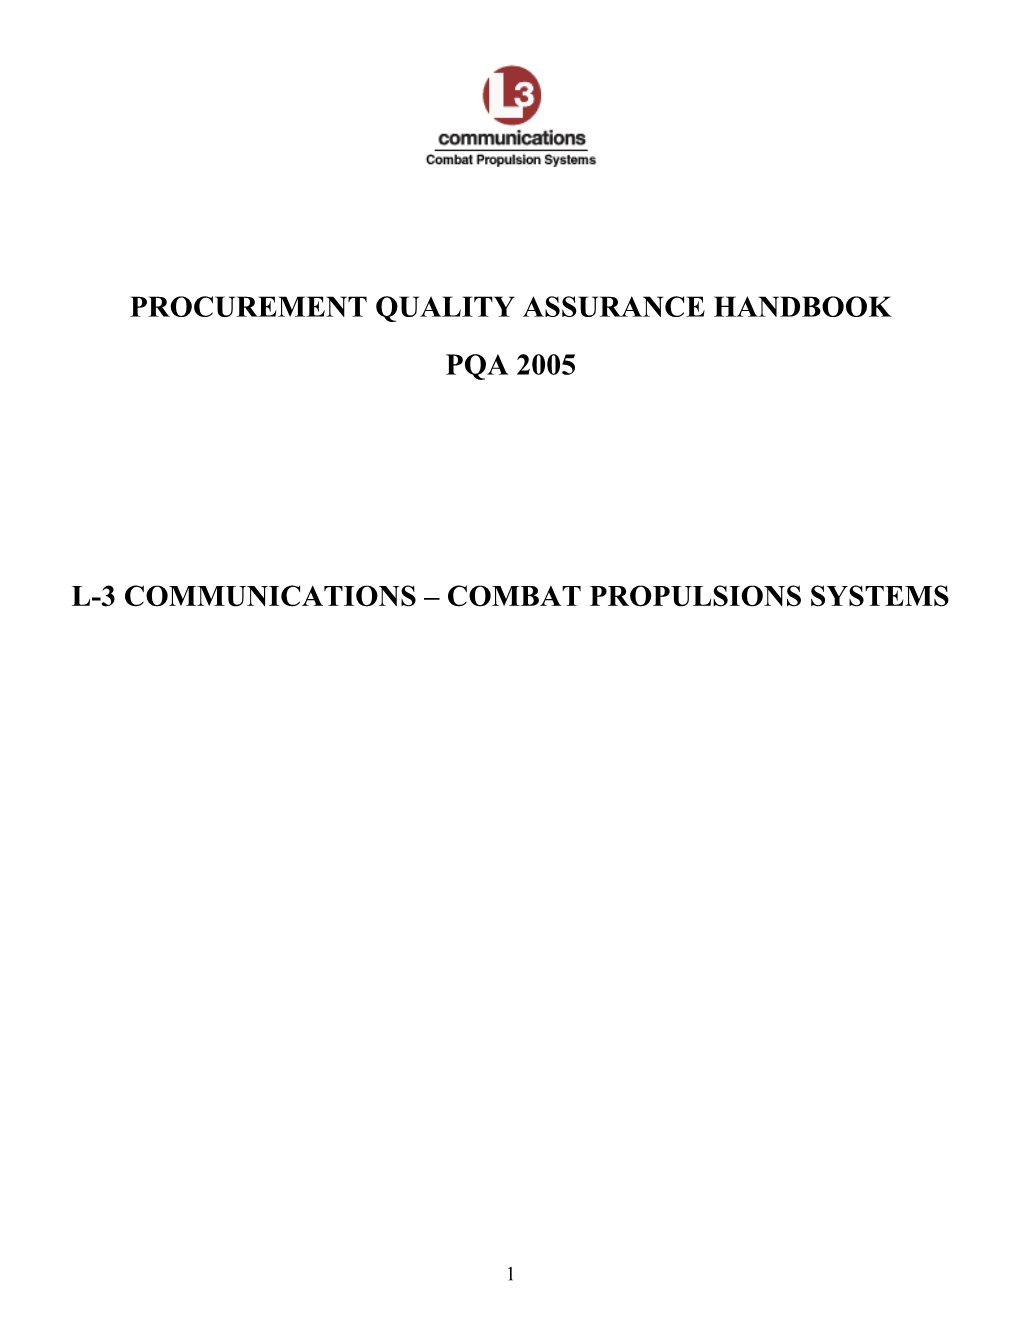 Procurement Quality Assurance Handbook